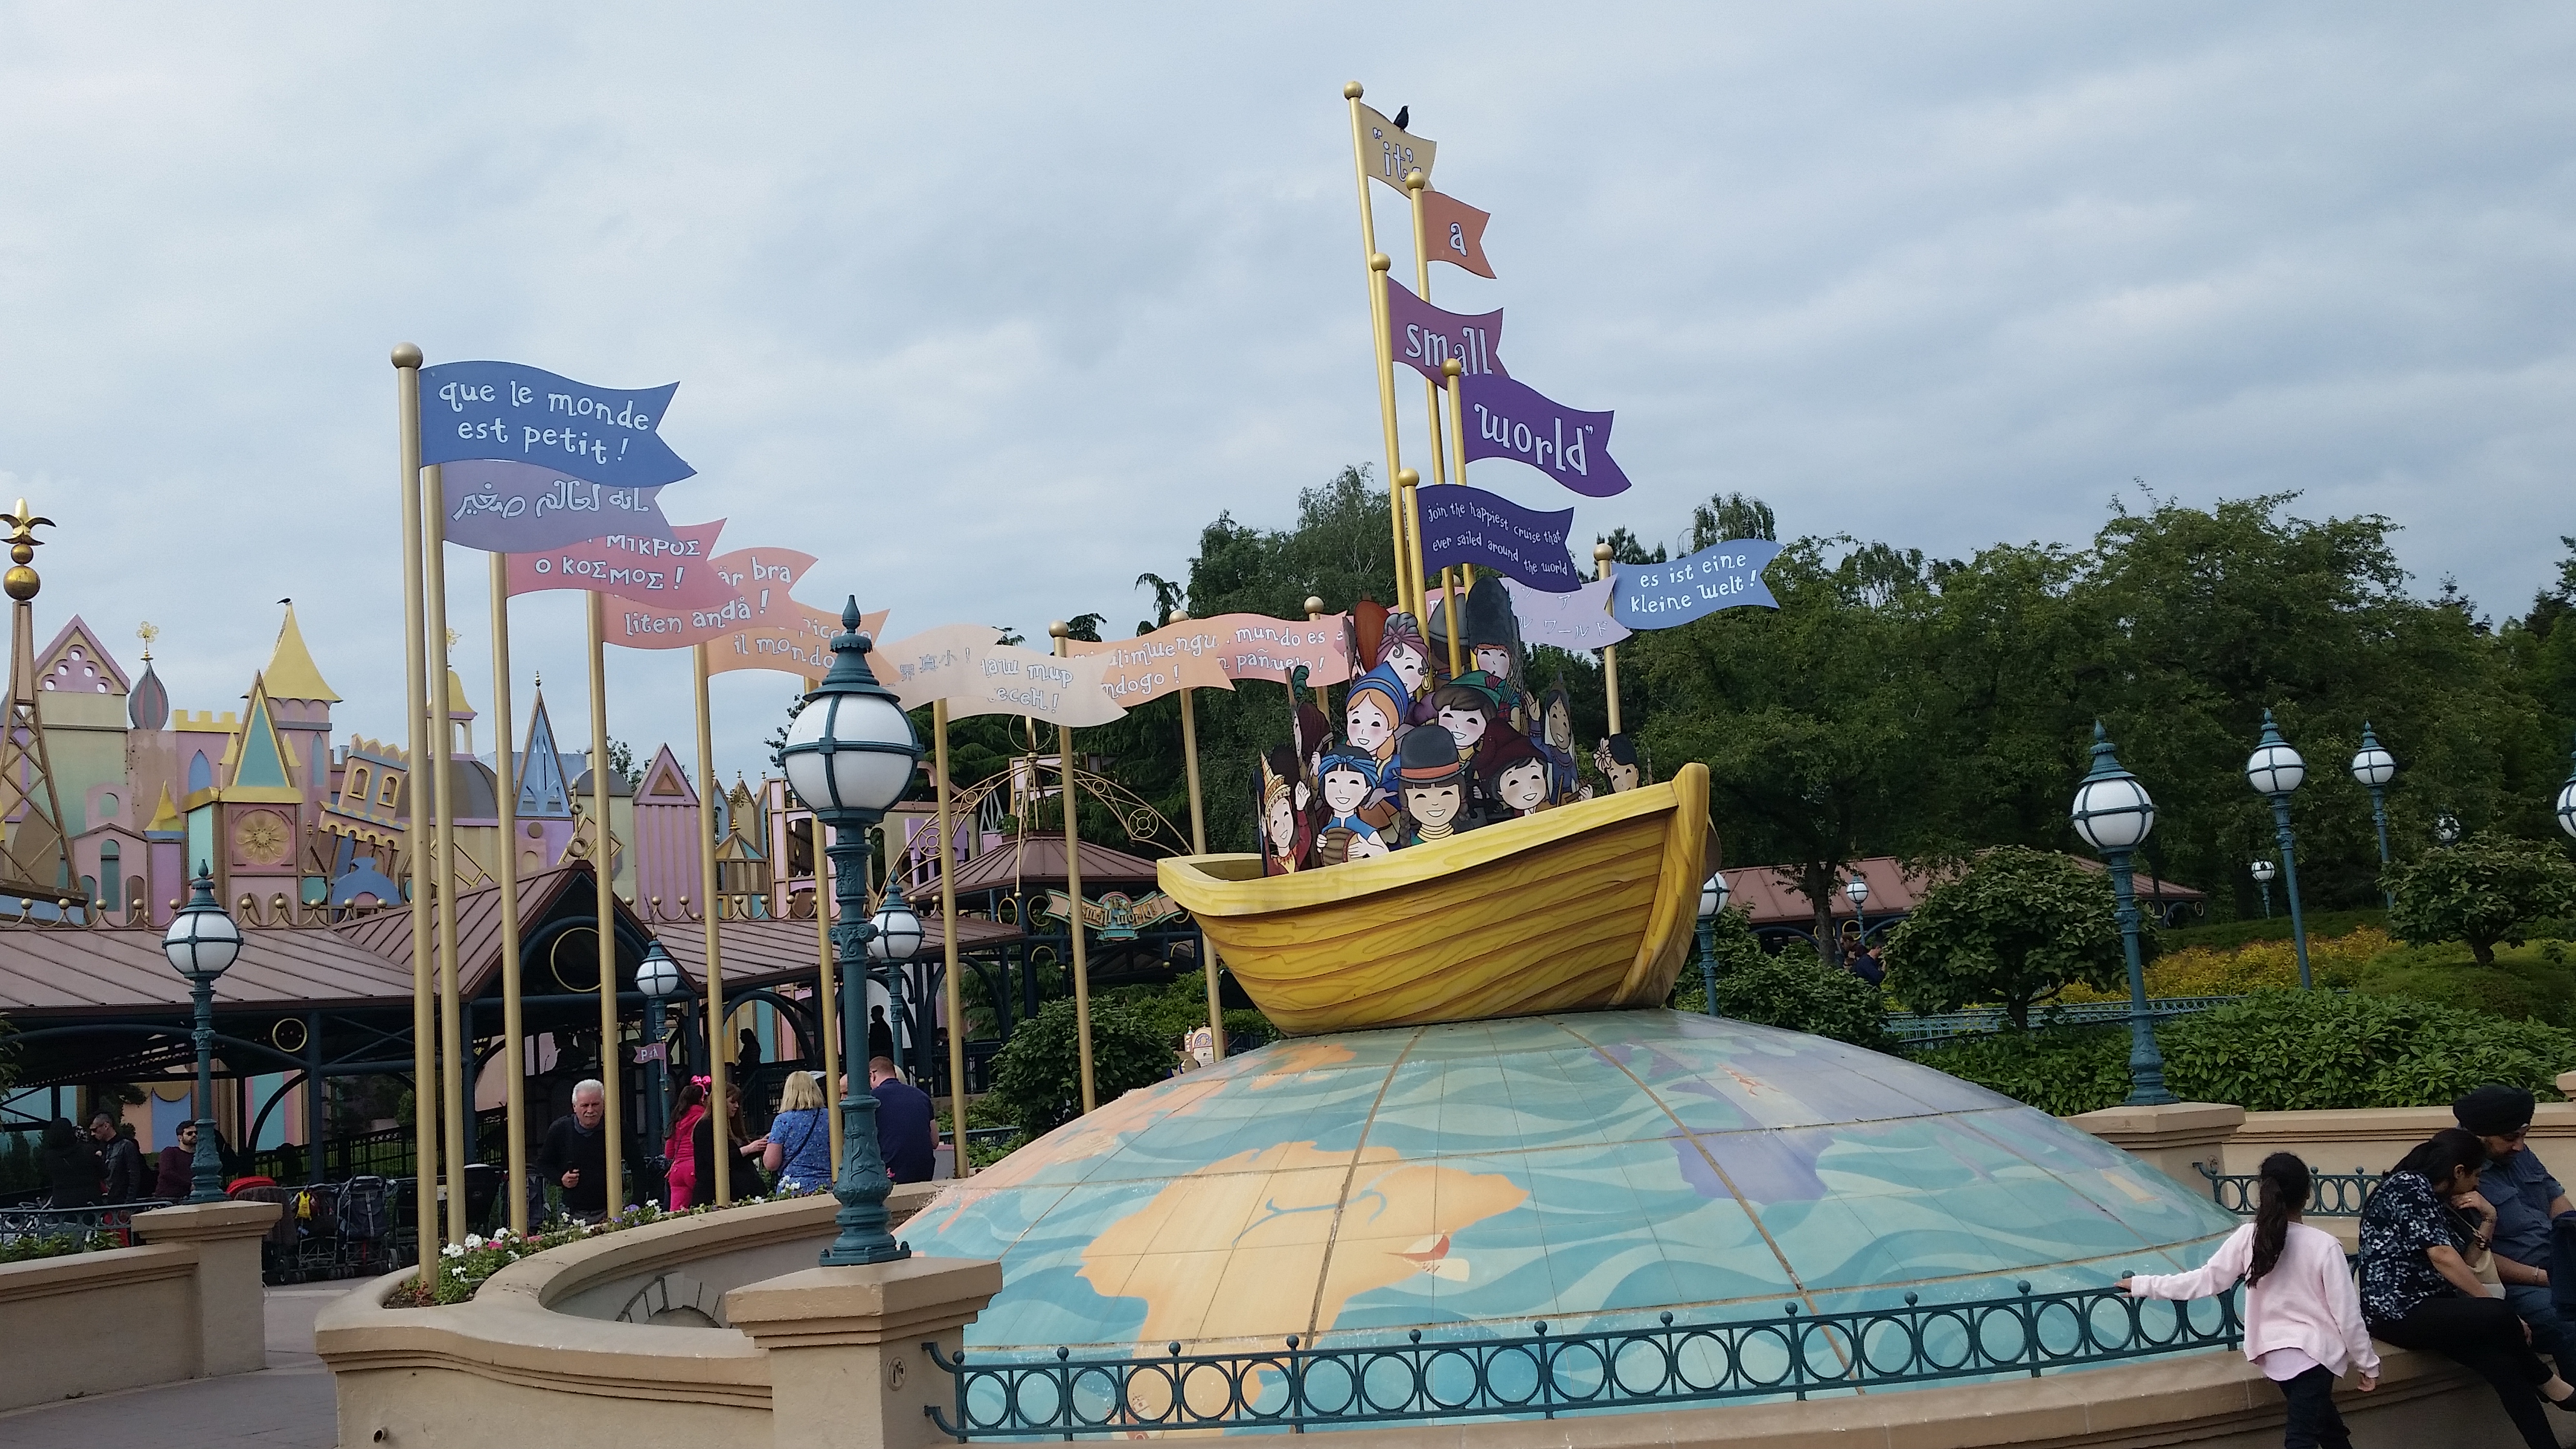 Disneyland Paris Part 3 – Fantasyland “Through the Looking Glass 